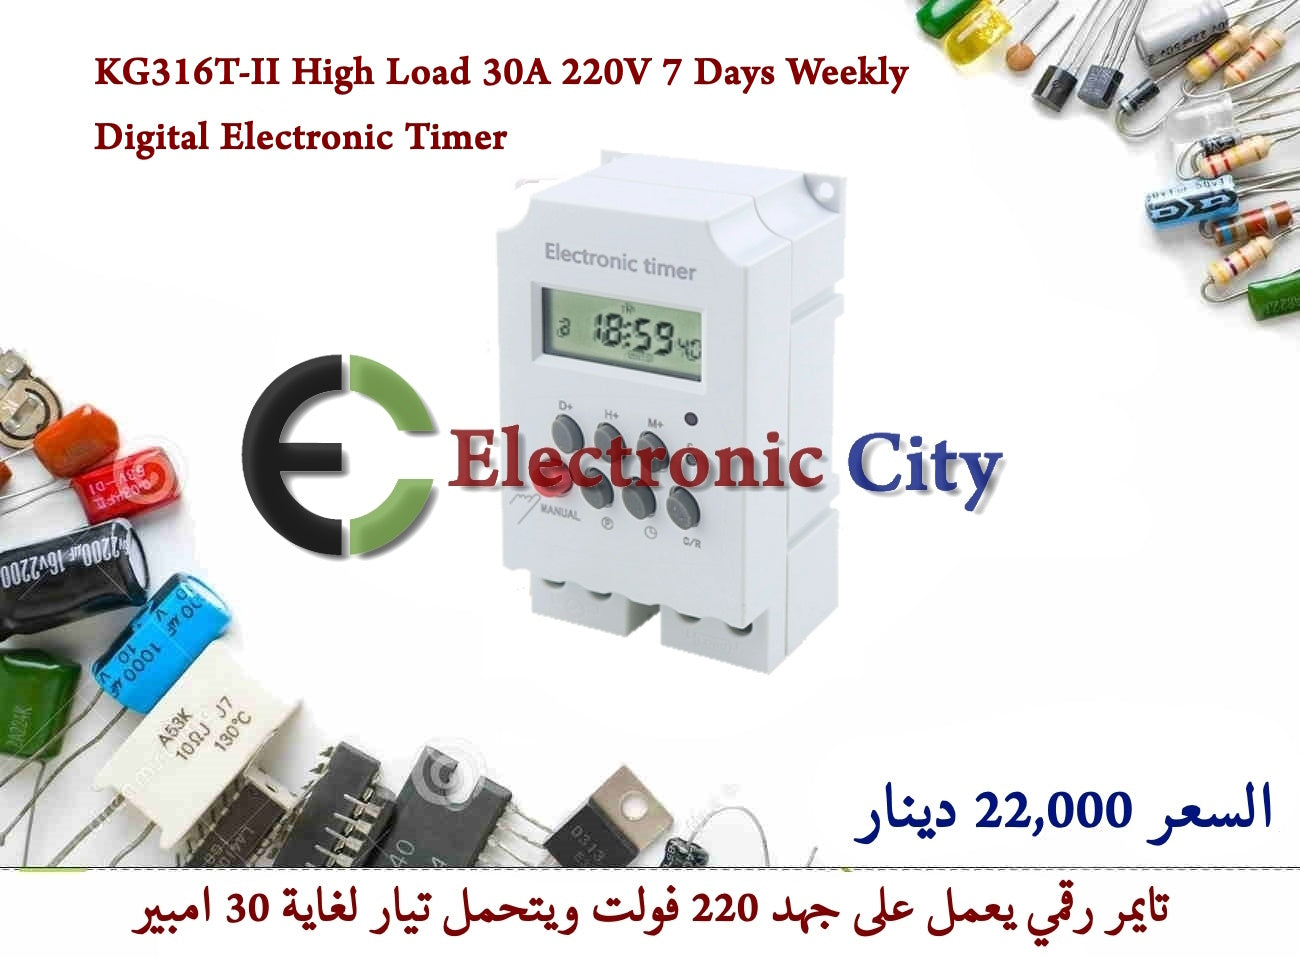 KG316T-II High Load 30A 220V 7 Days Weekly Digital Electronic Timer #Q XR0011-59